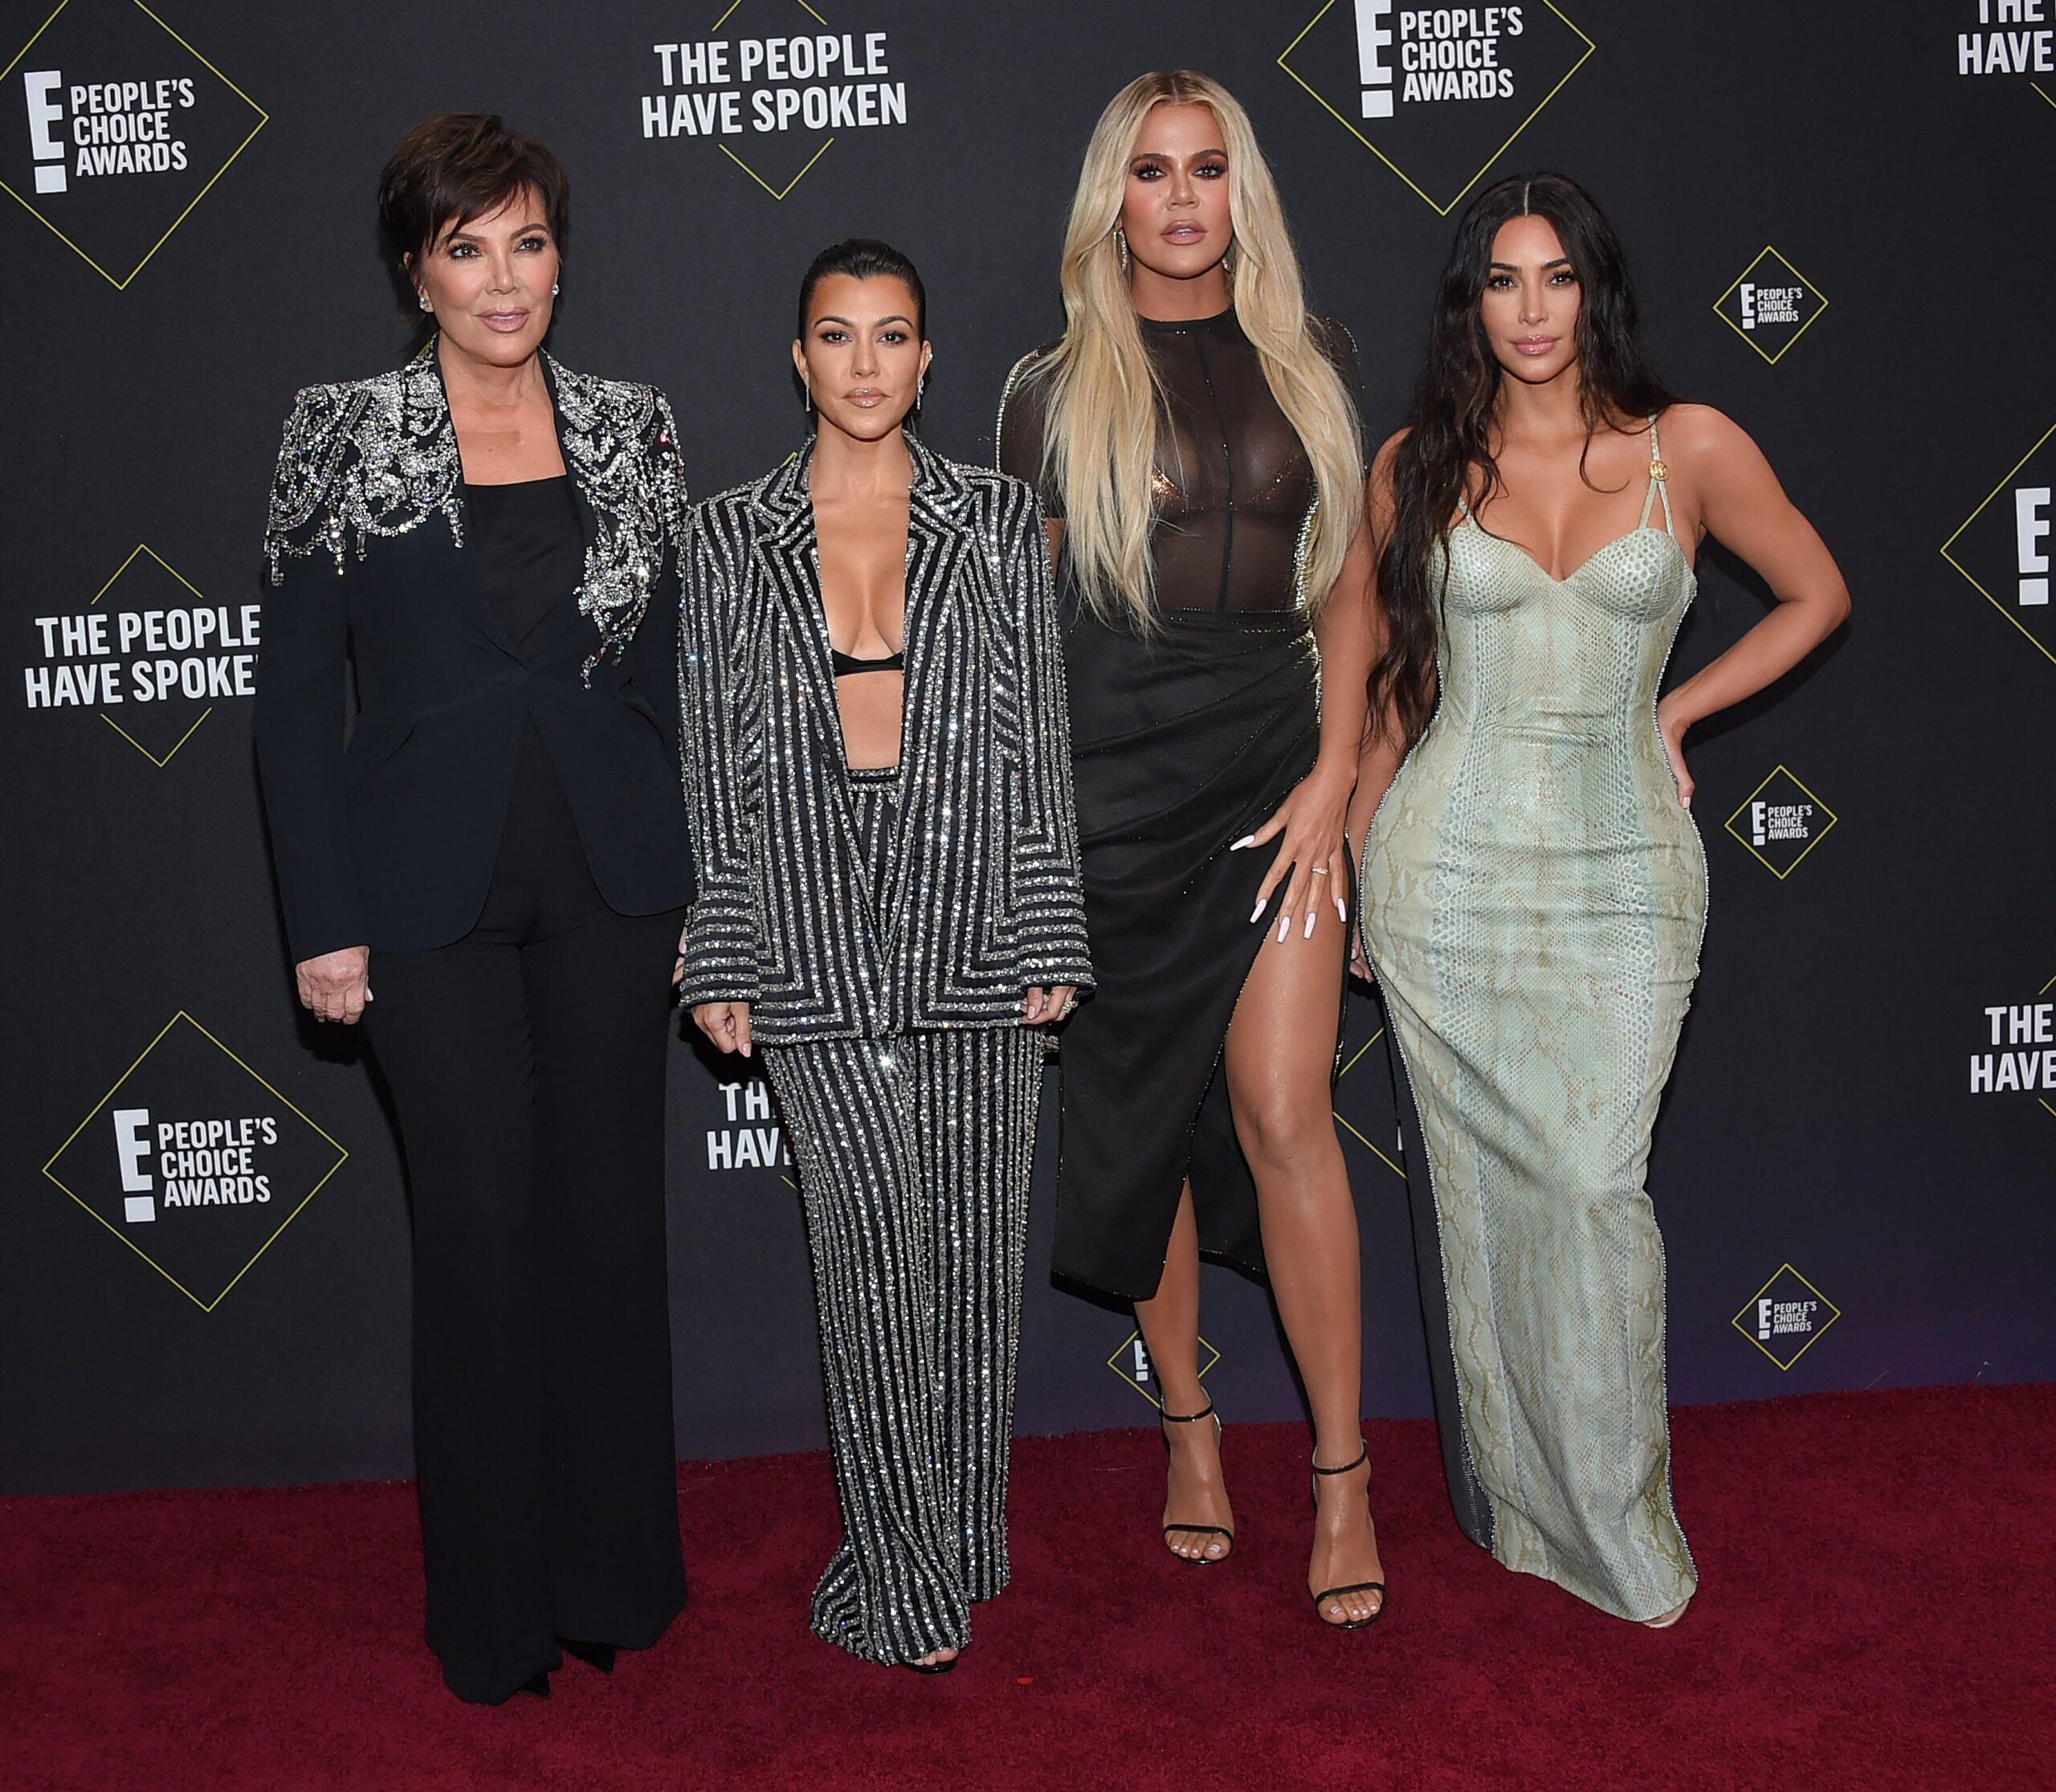 Kris Jenner, Kourtney Kardashian, Khloe Kardashian and Kim Kardashian